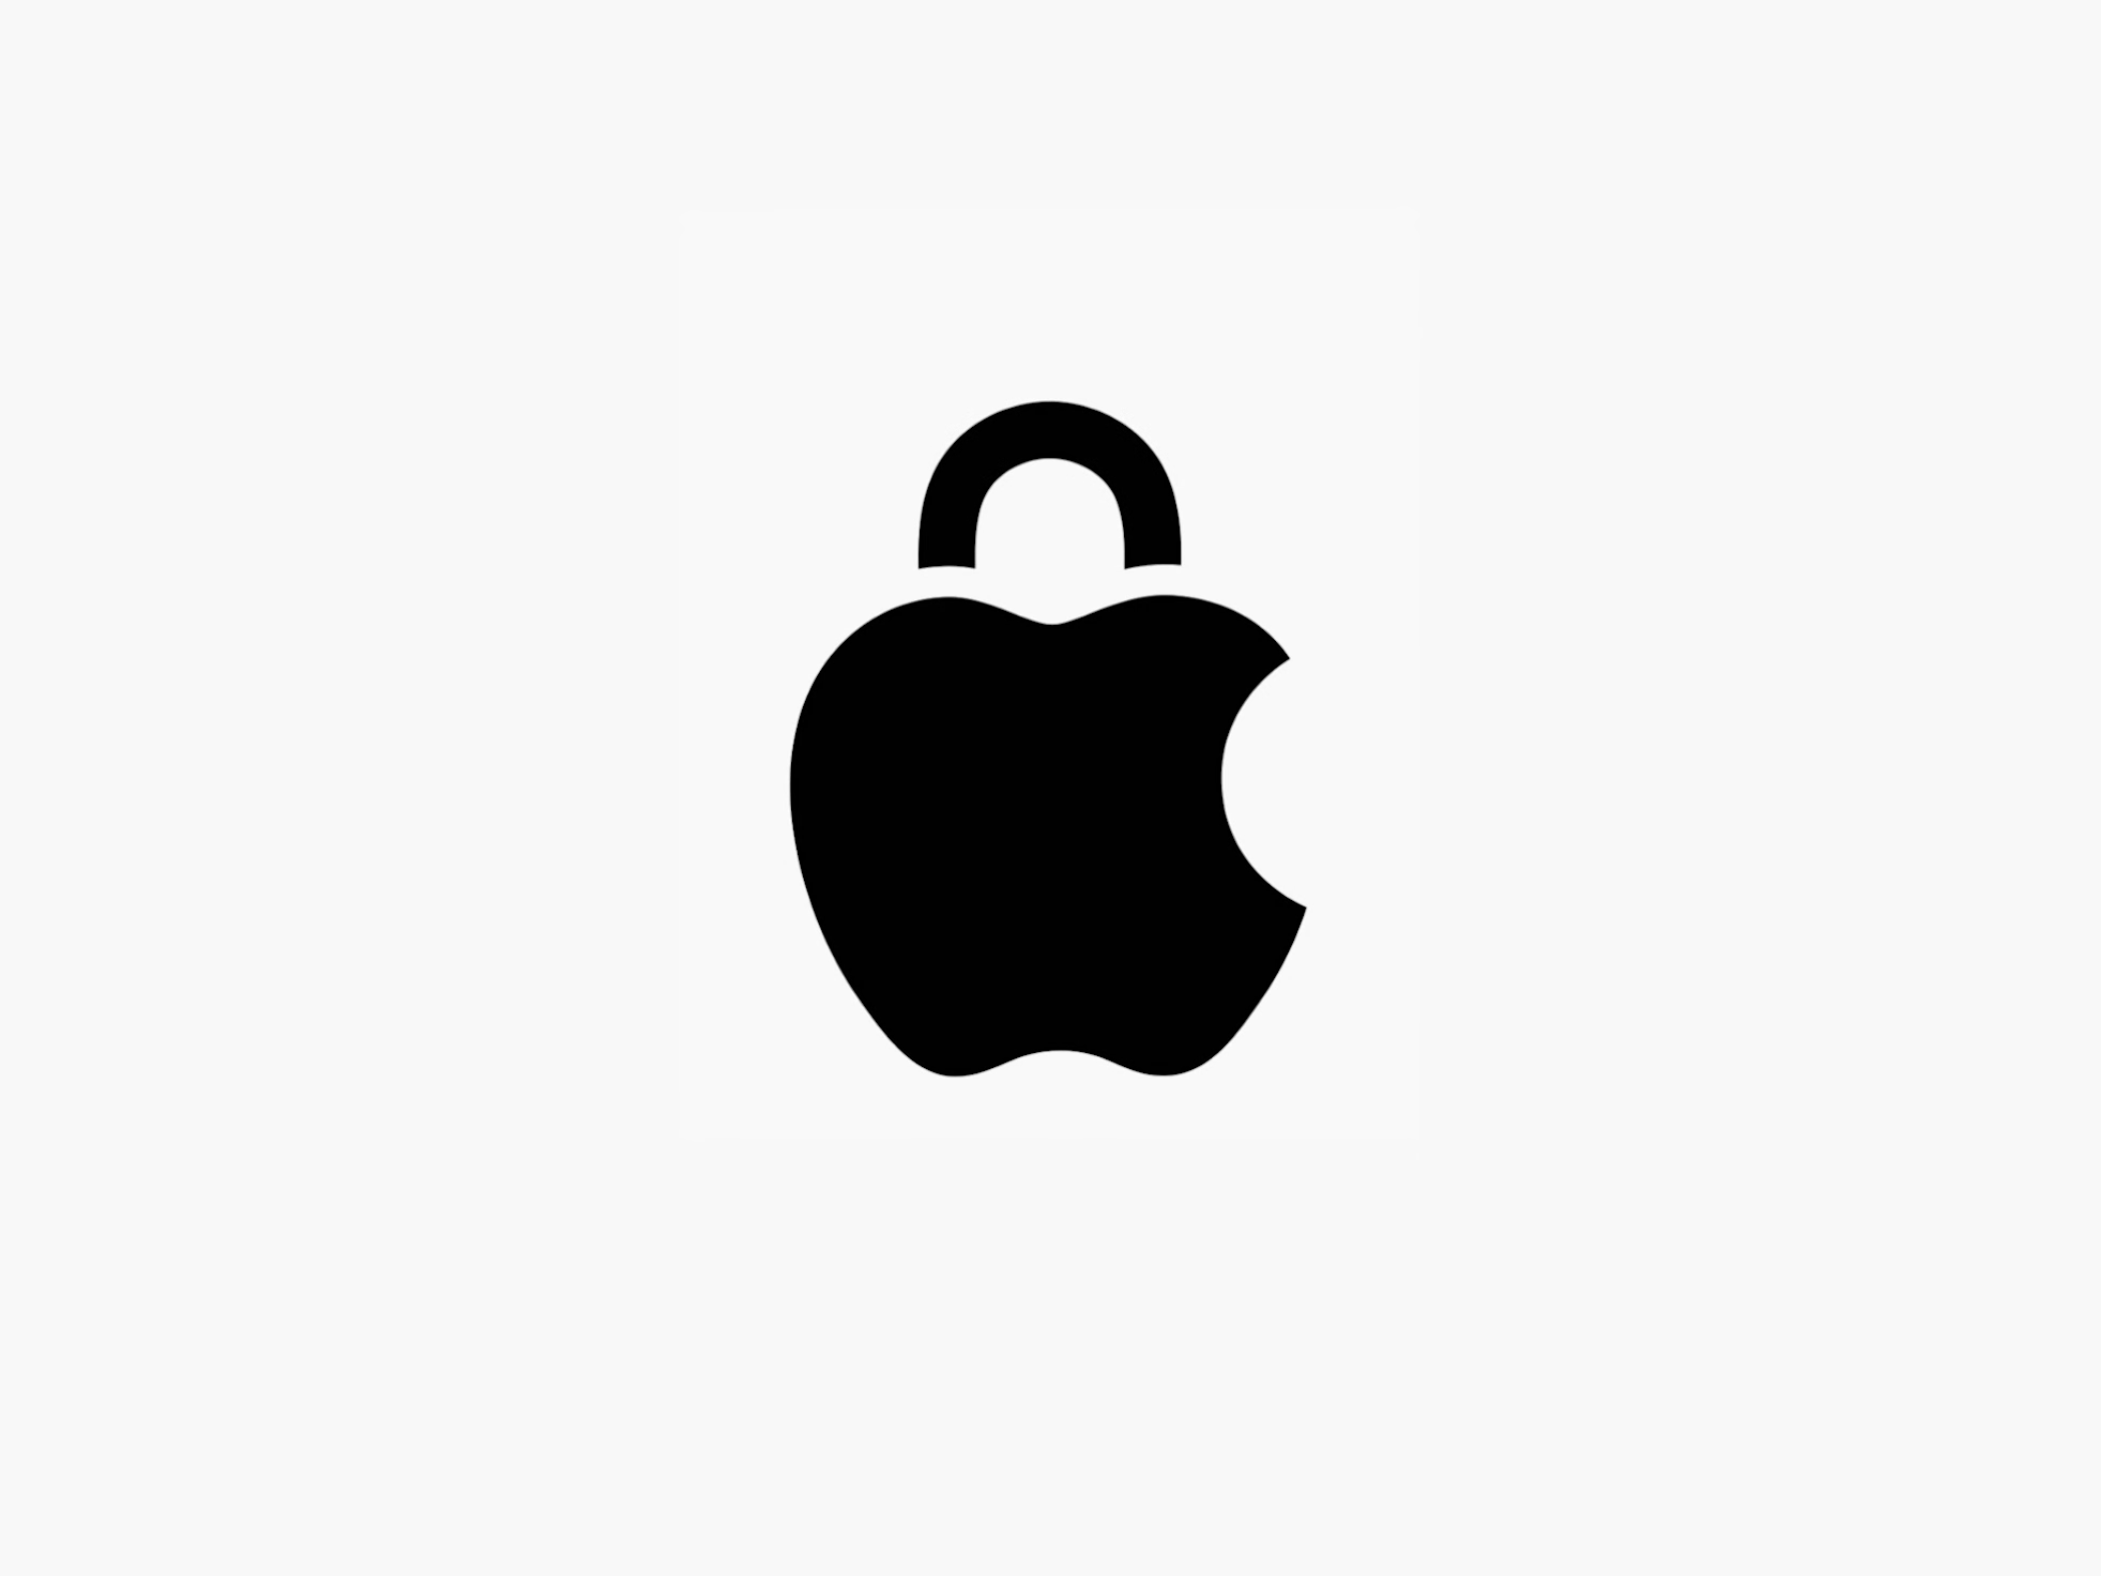 Apple logo as a padlock